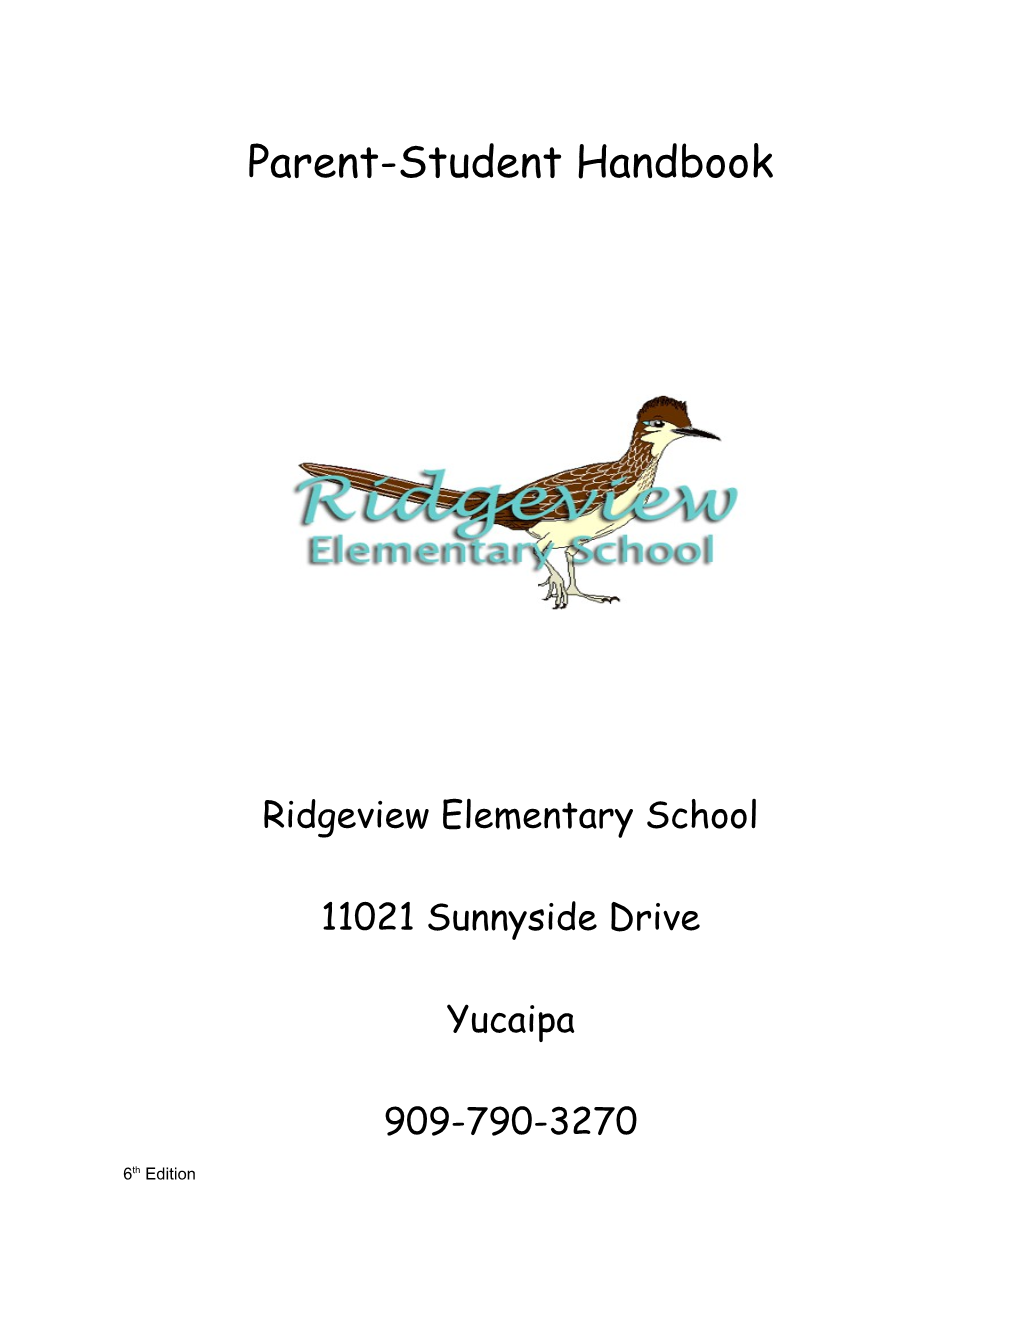 Parent-Student Handbook s2